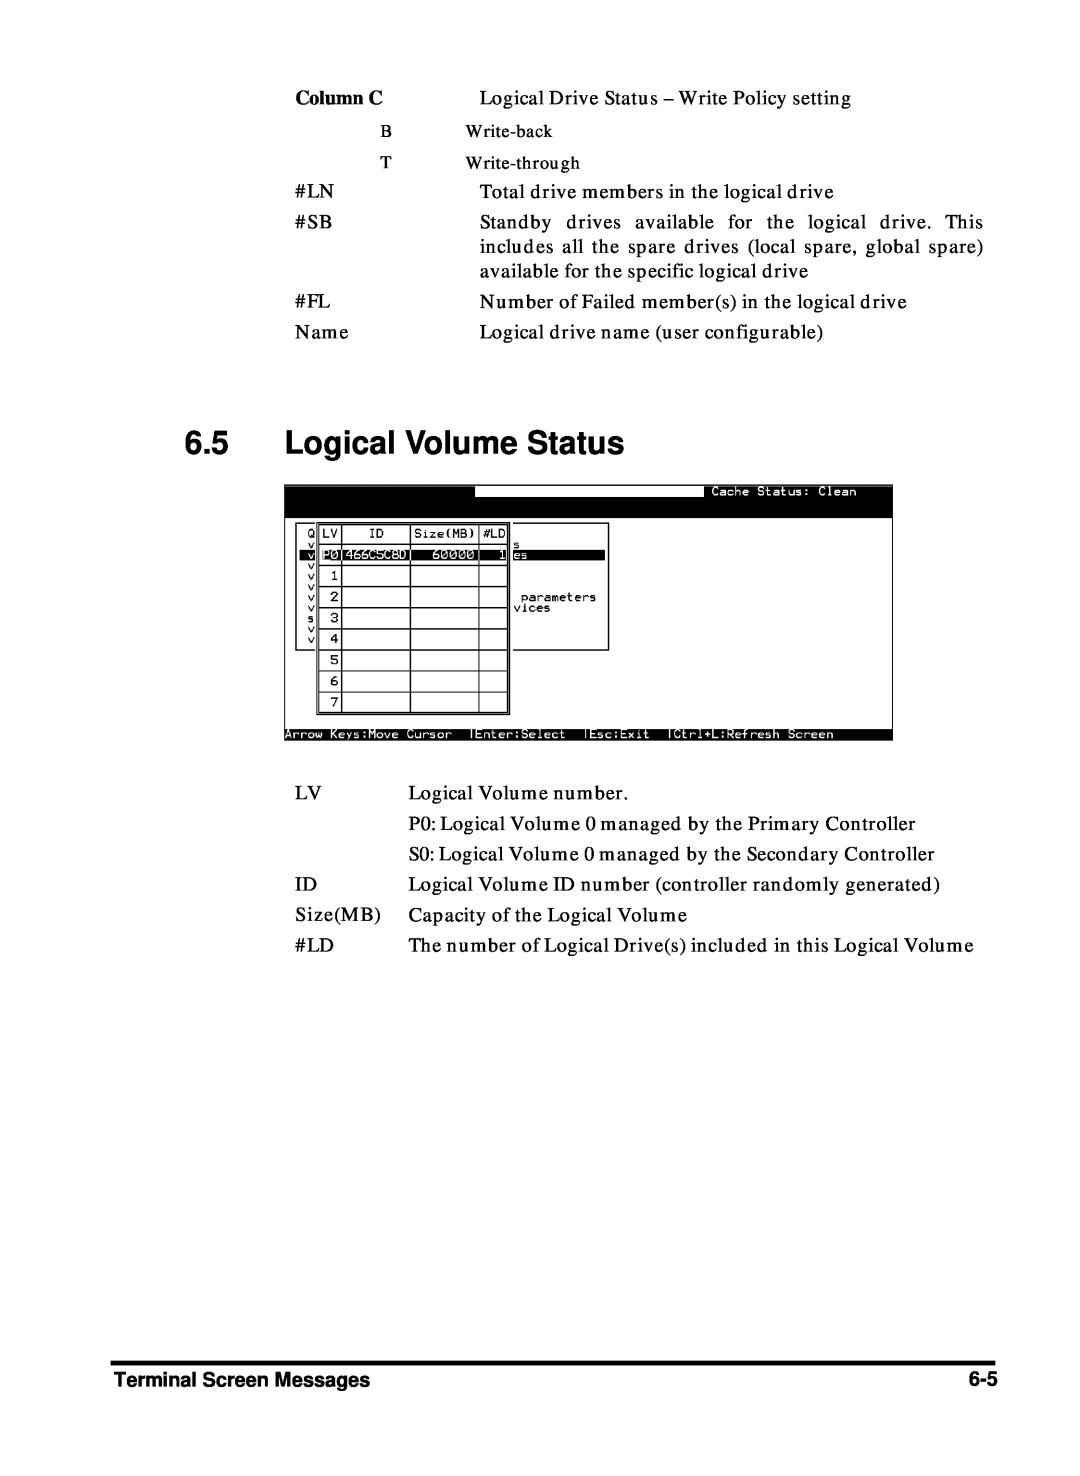 Compaq Infortrend manual Logical Volume Status, Column C, Name, SizeMB 